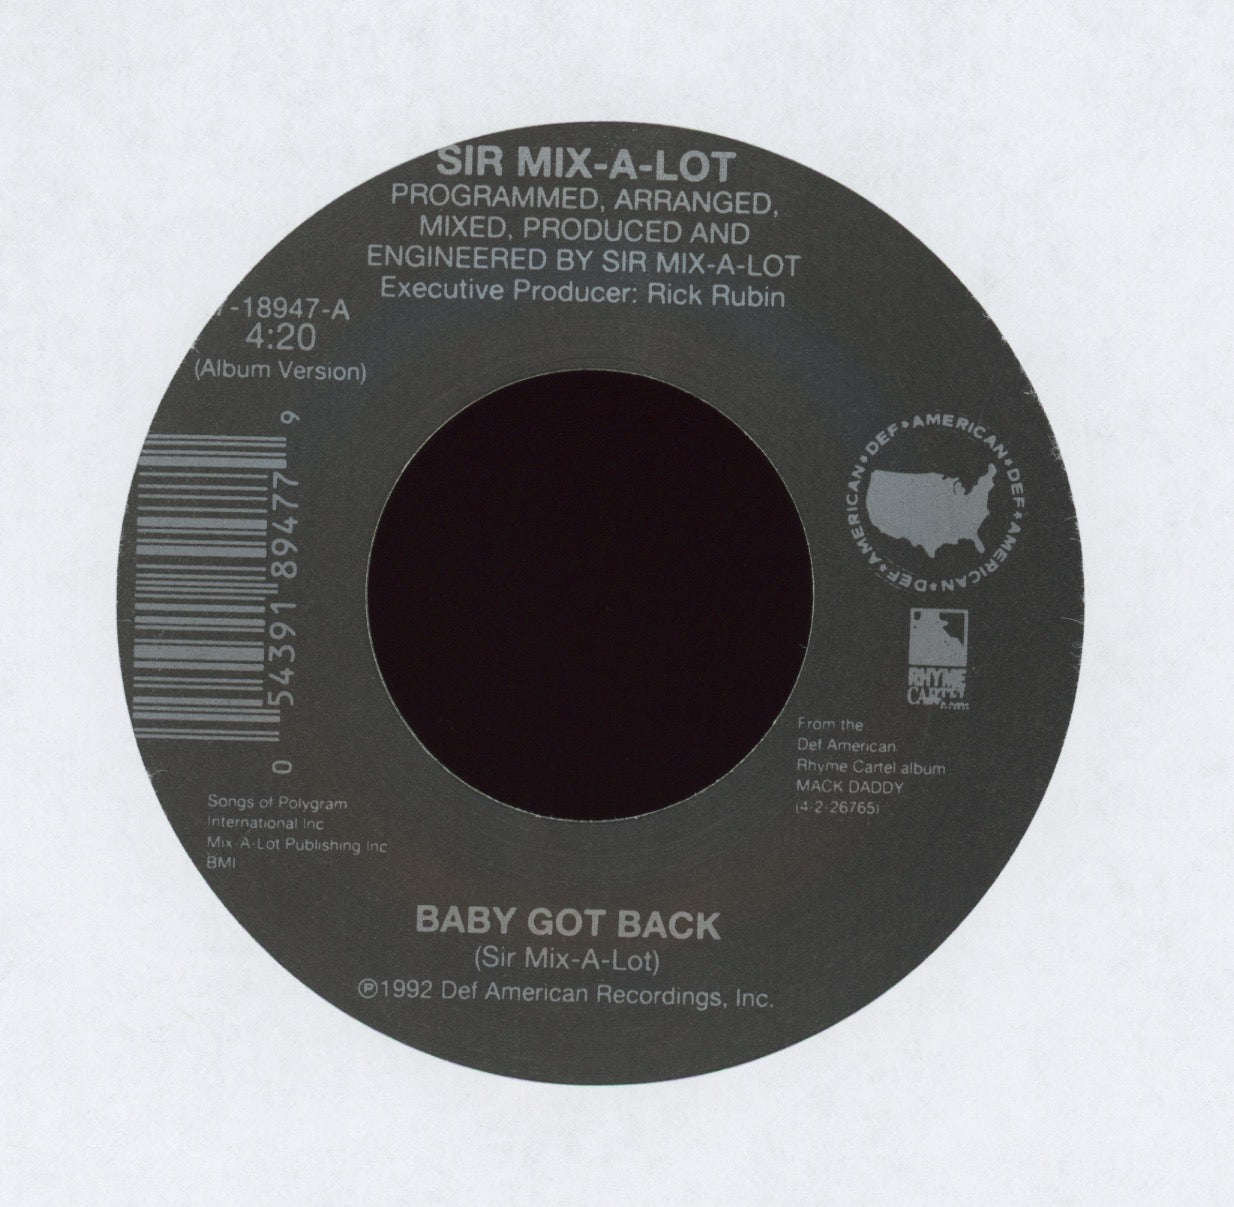 Sir Mix-A-Lot - Baby Got Back on Def American Rap 45